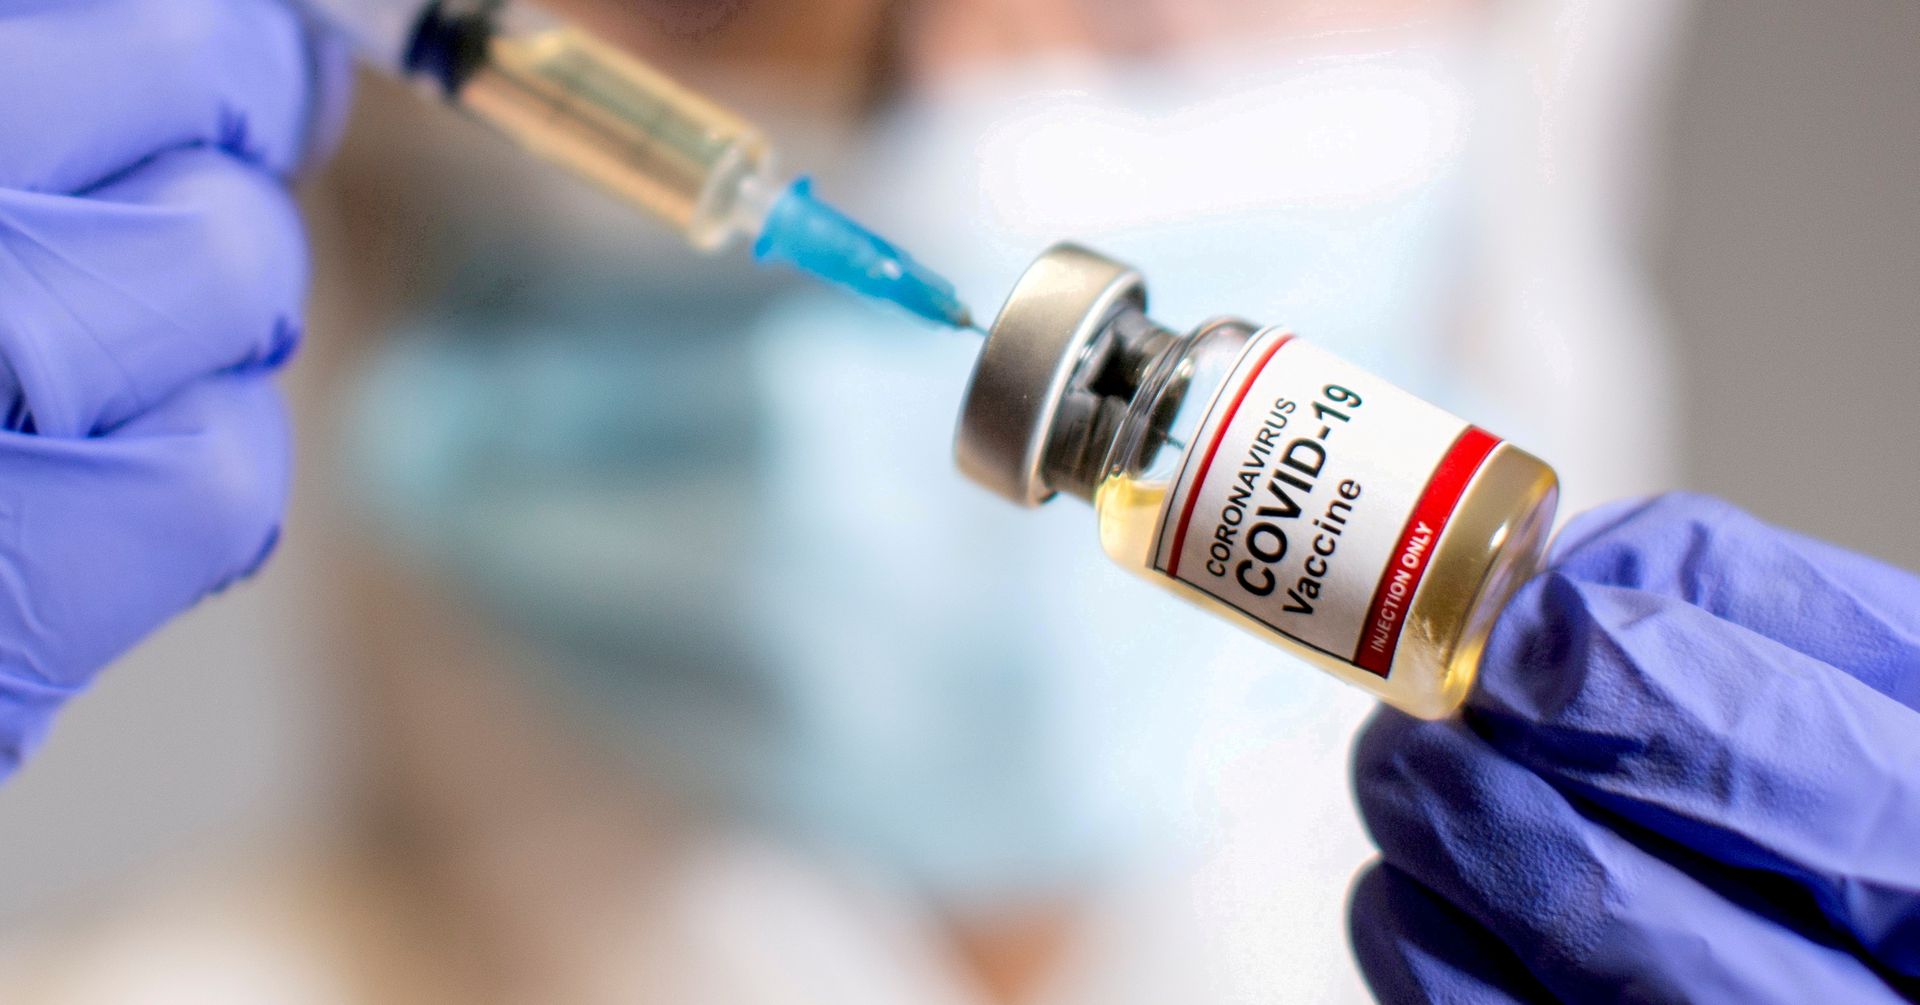 indiascovid19vaccinationcoveragecrosses200crore30lakhmark